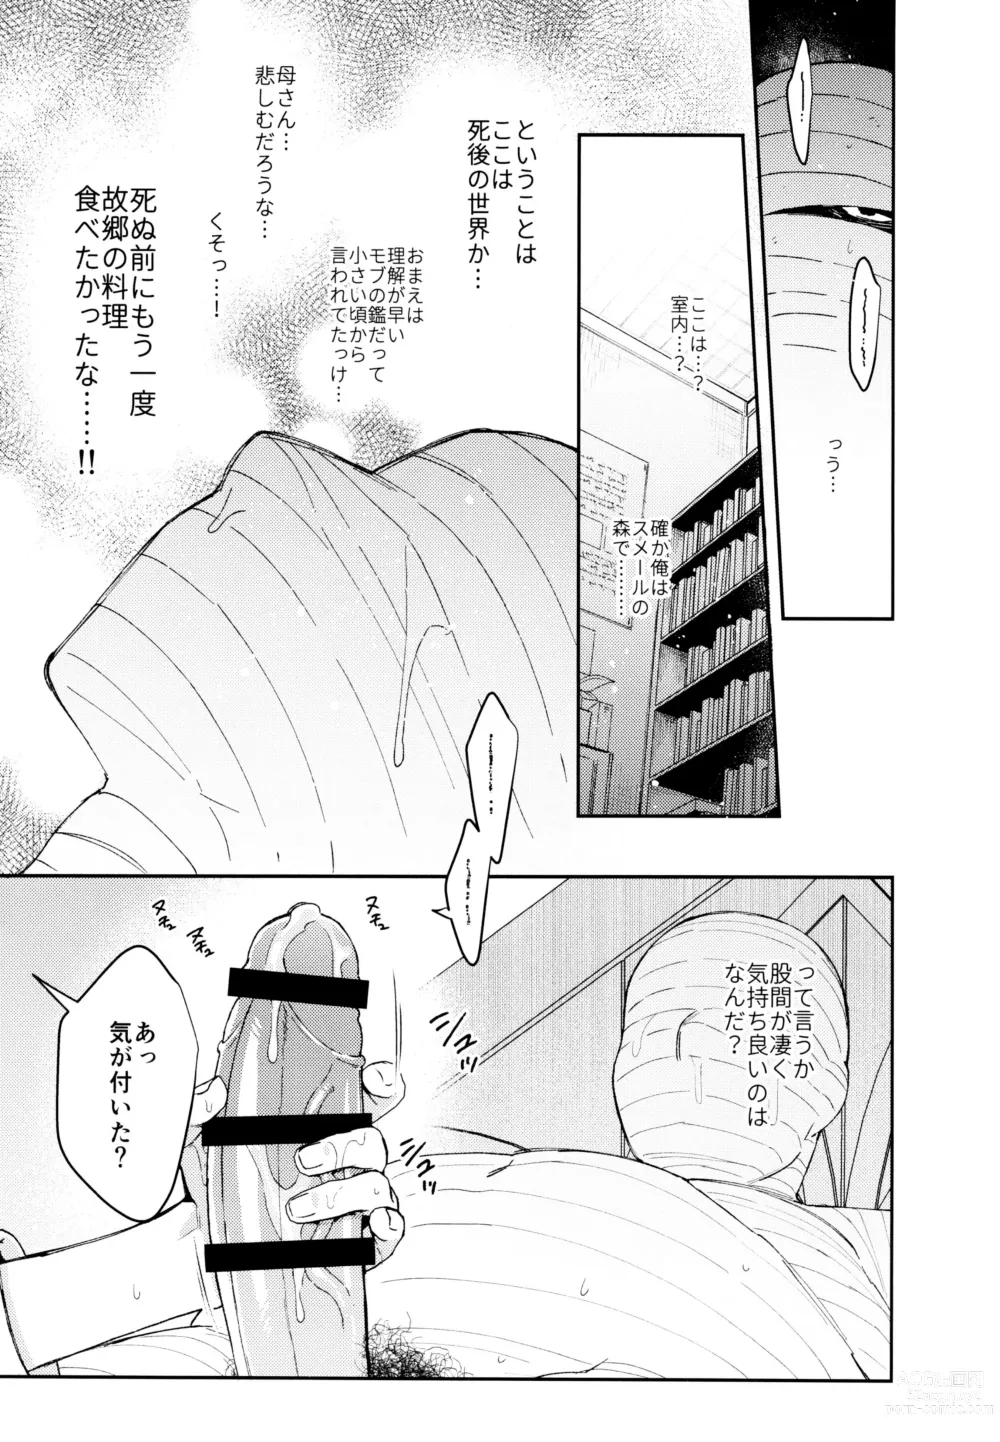 Page 11 of doujinshi ORE:CN